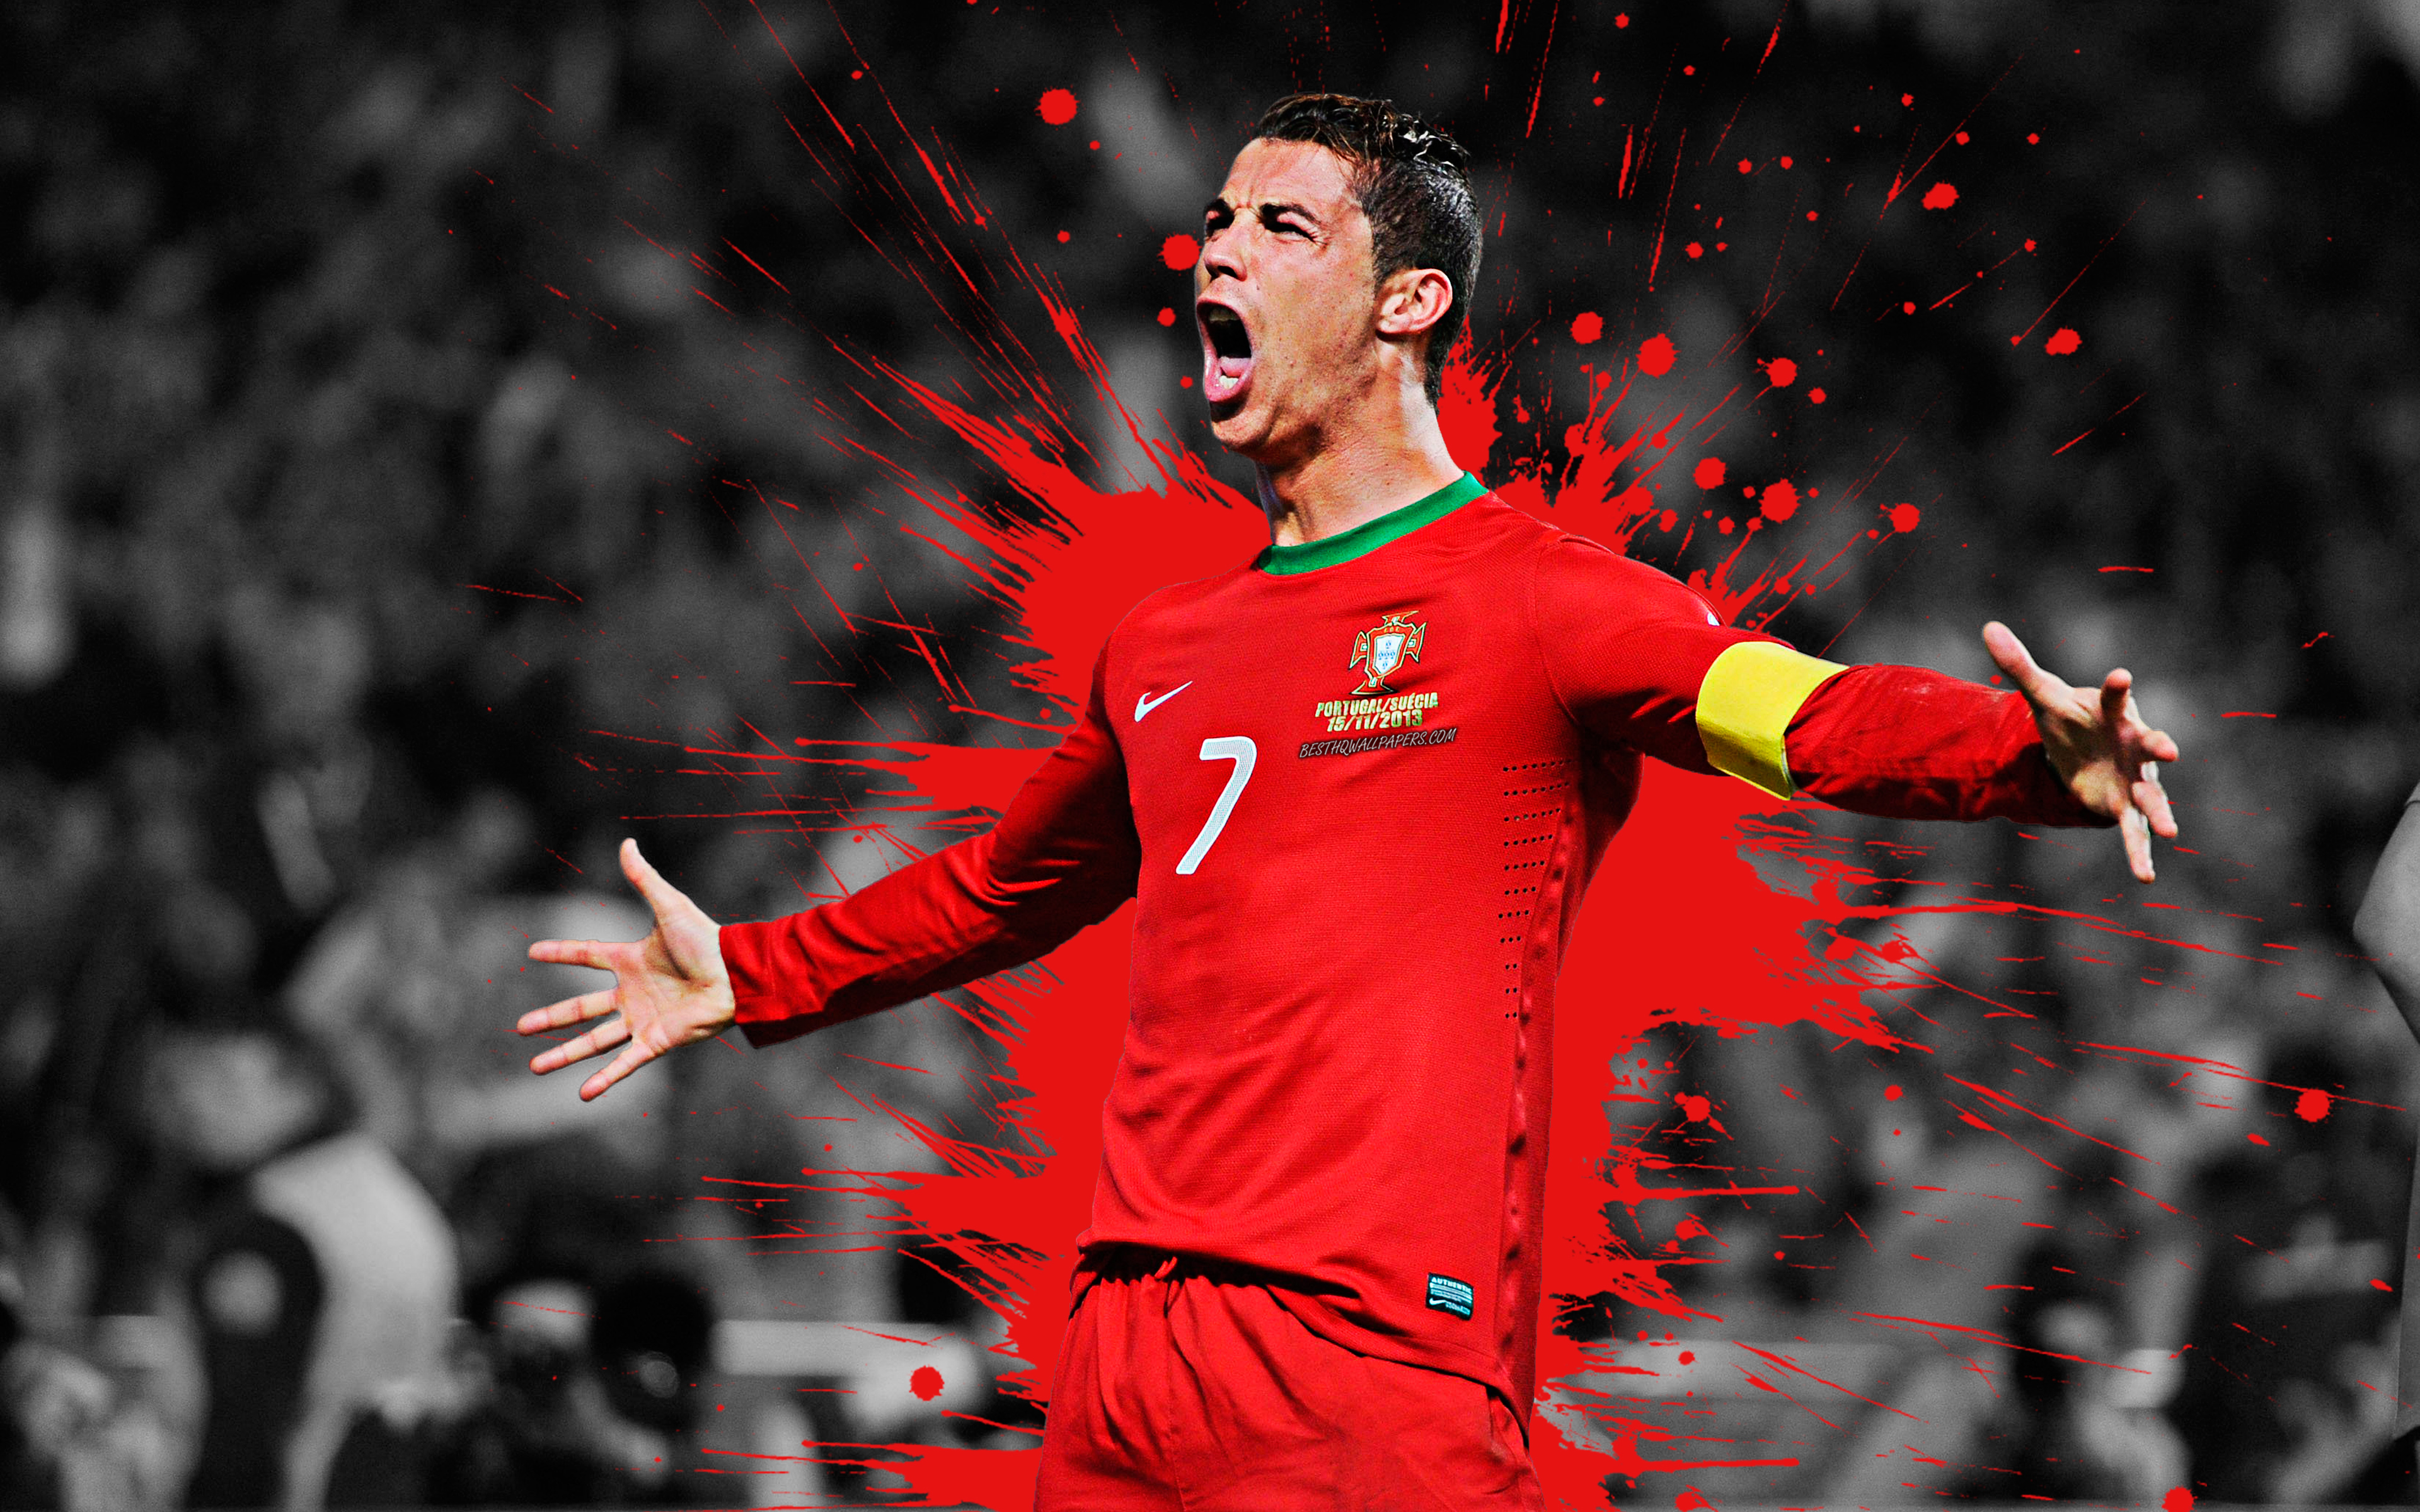 Download Football Athlete Cristiano Ronaldo Hd 4k Wallpaper